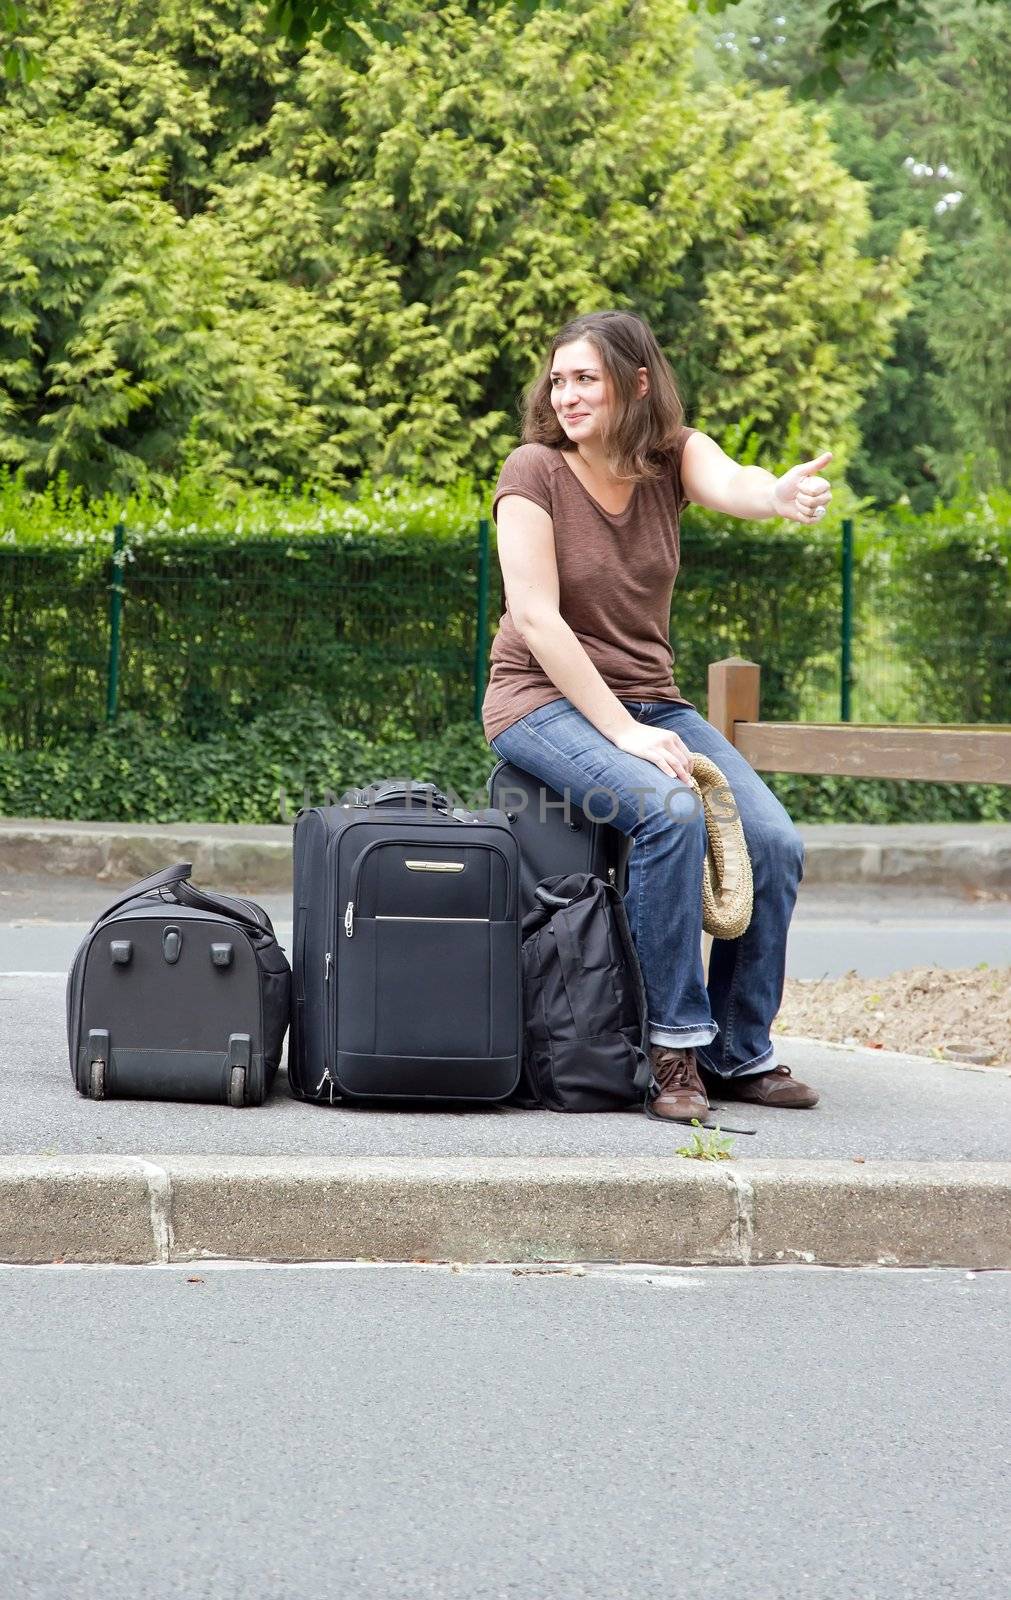 woman making hitchhiking, sitting on his luggage